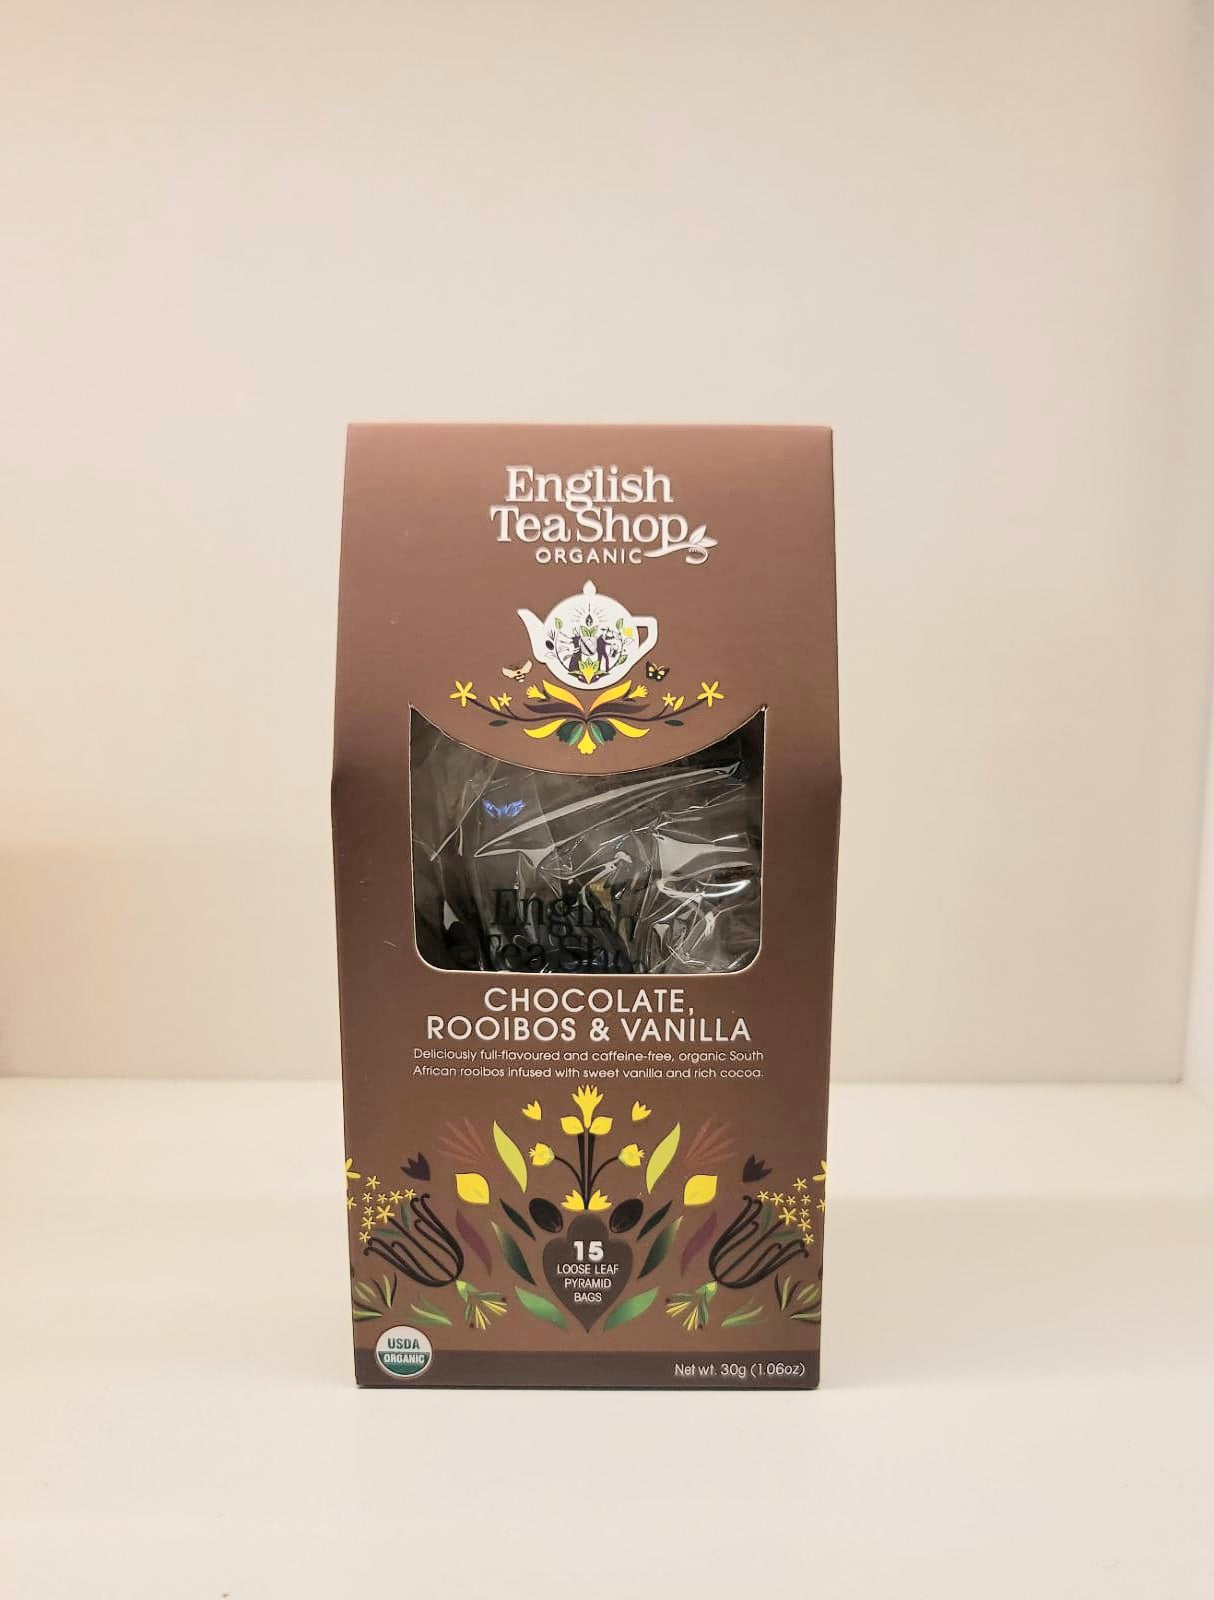 English Tea Shop Organic - Chocolate Rooibos & Vanilla (可可雲呢拿博士茶)